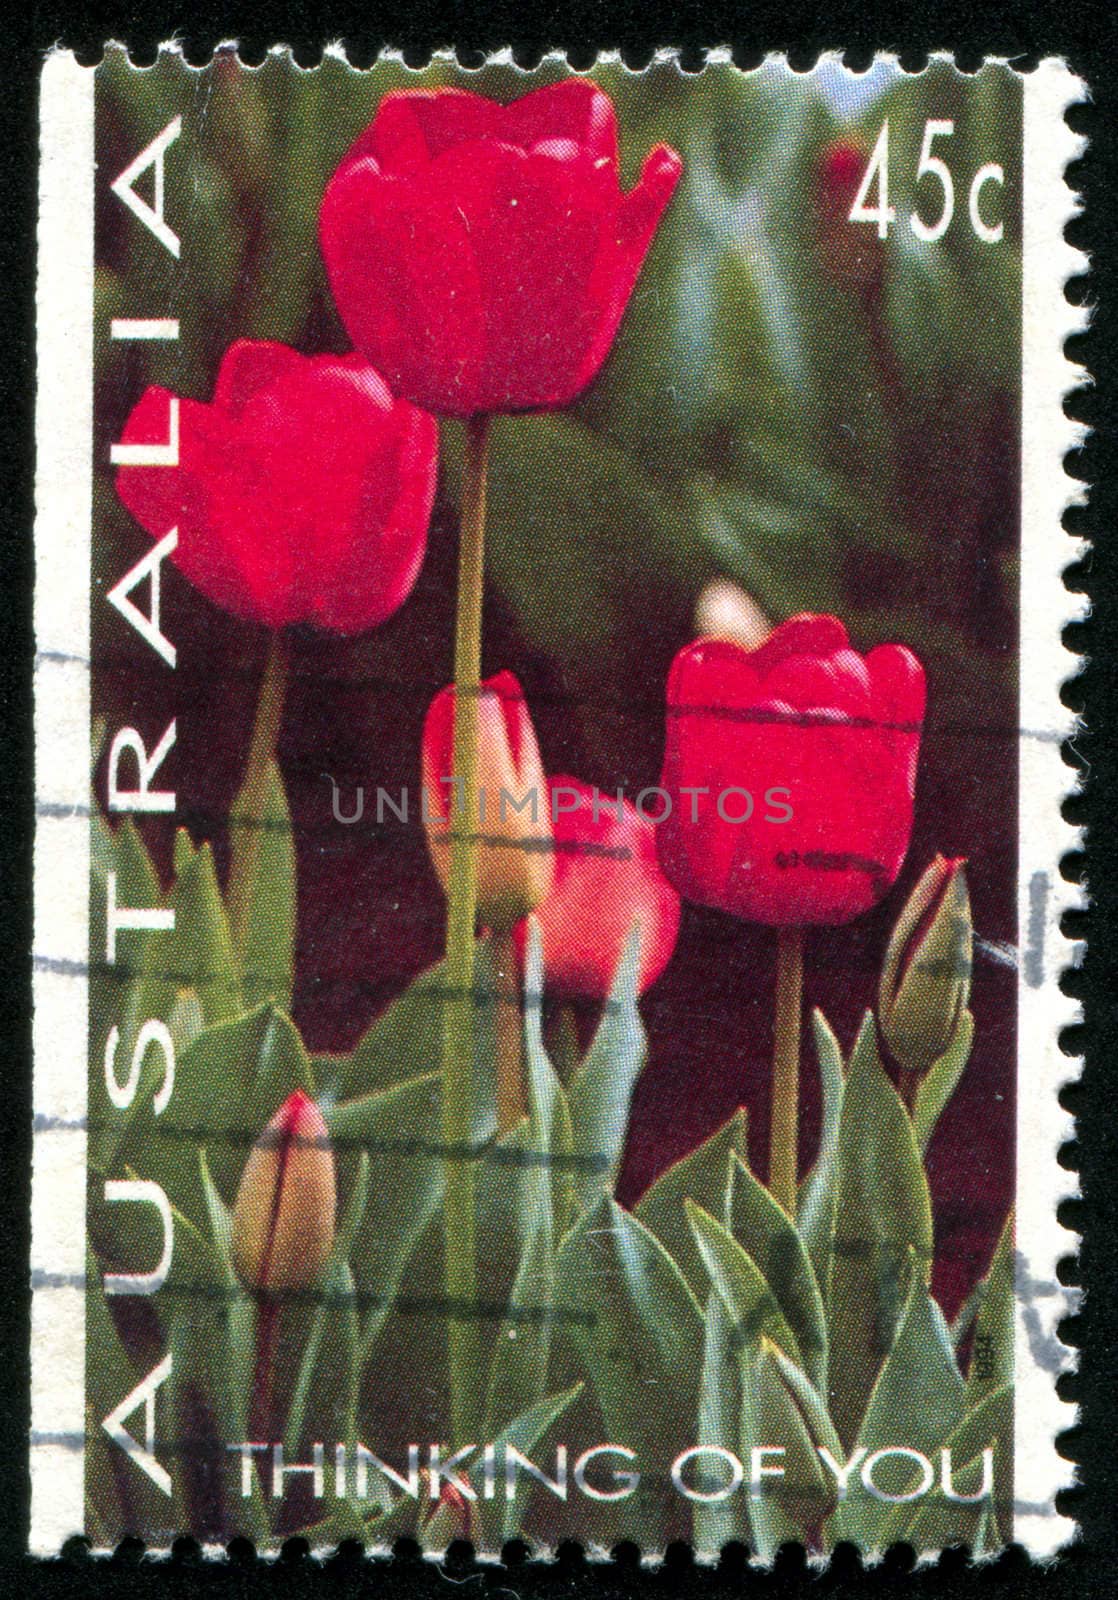 AUSTRALIA - CIRCA 1994: stamp printed by Australia, shows Tulips, circa 1994